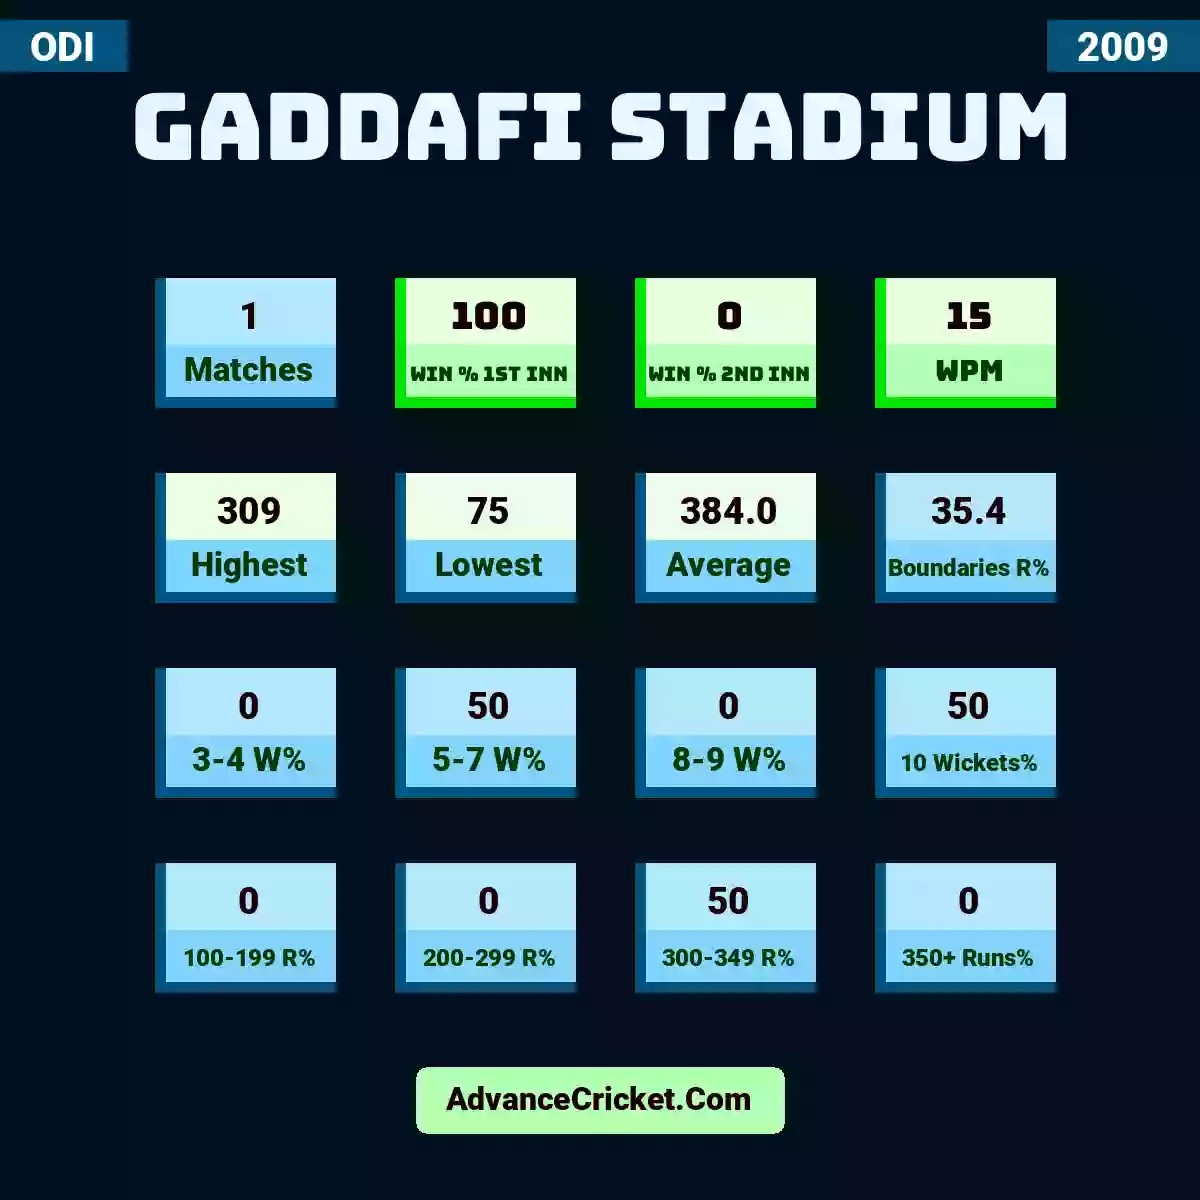 Image showing Gaddafi Stadium with Matches: 1, Win % 1st Inn: 100, Win % 2nd Inn: 0, WPM: 15, Highest: 309, Lowest: 75, Average: 384.0, Boundaries R%: 35.4, 3-4 W%: 0, 5-7 W%: 50, 8-9 W%: 0, 10 Wickets%: 50, 100-199 R%: 0, 200-299 R%: 0, 300-349 R%: 50, 350+ Runs%: 0.